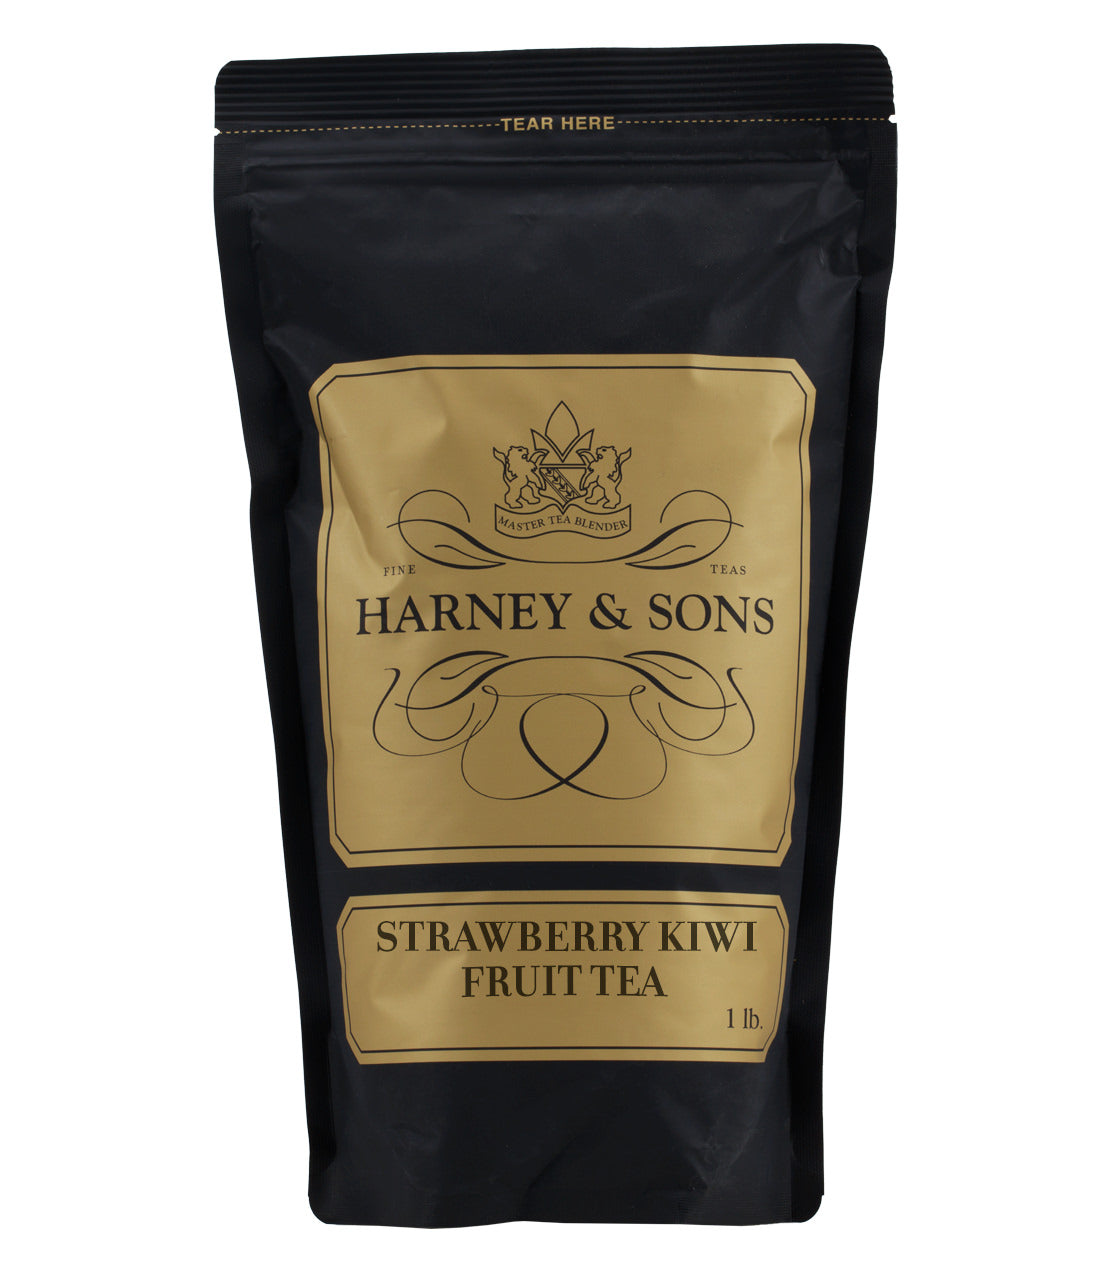 Strawberry Kiwi Fruit Tea - Loose 1 lb. Bag - Harney & Sons Fine Teas